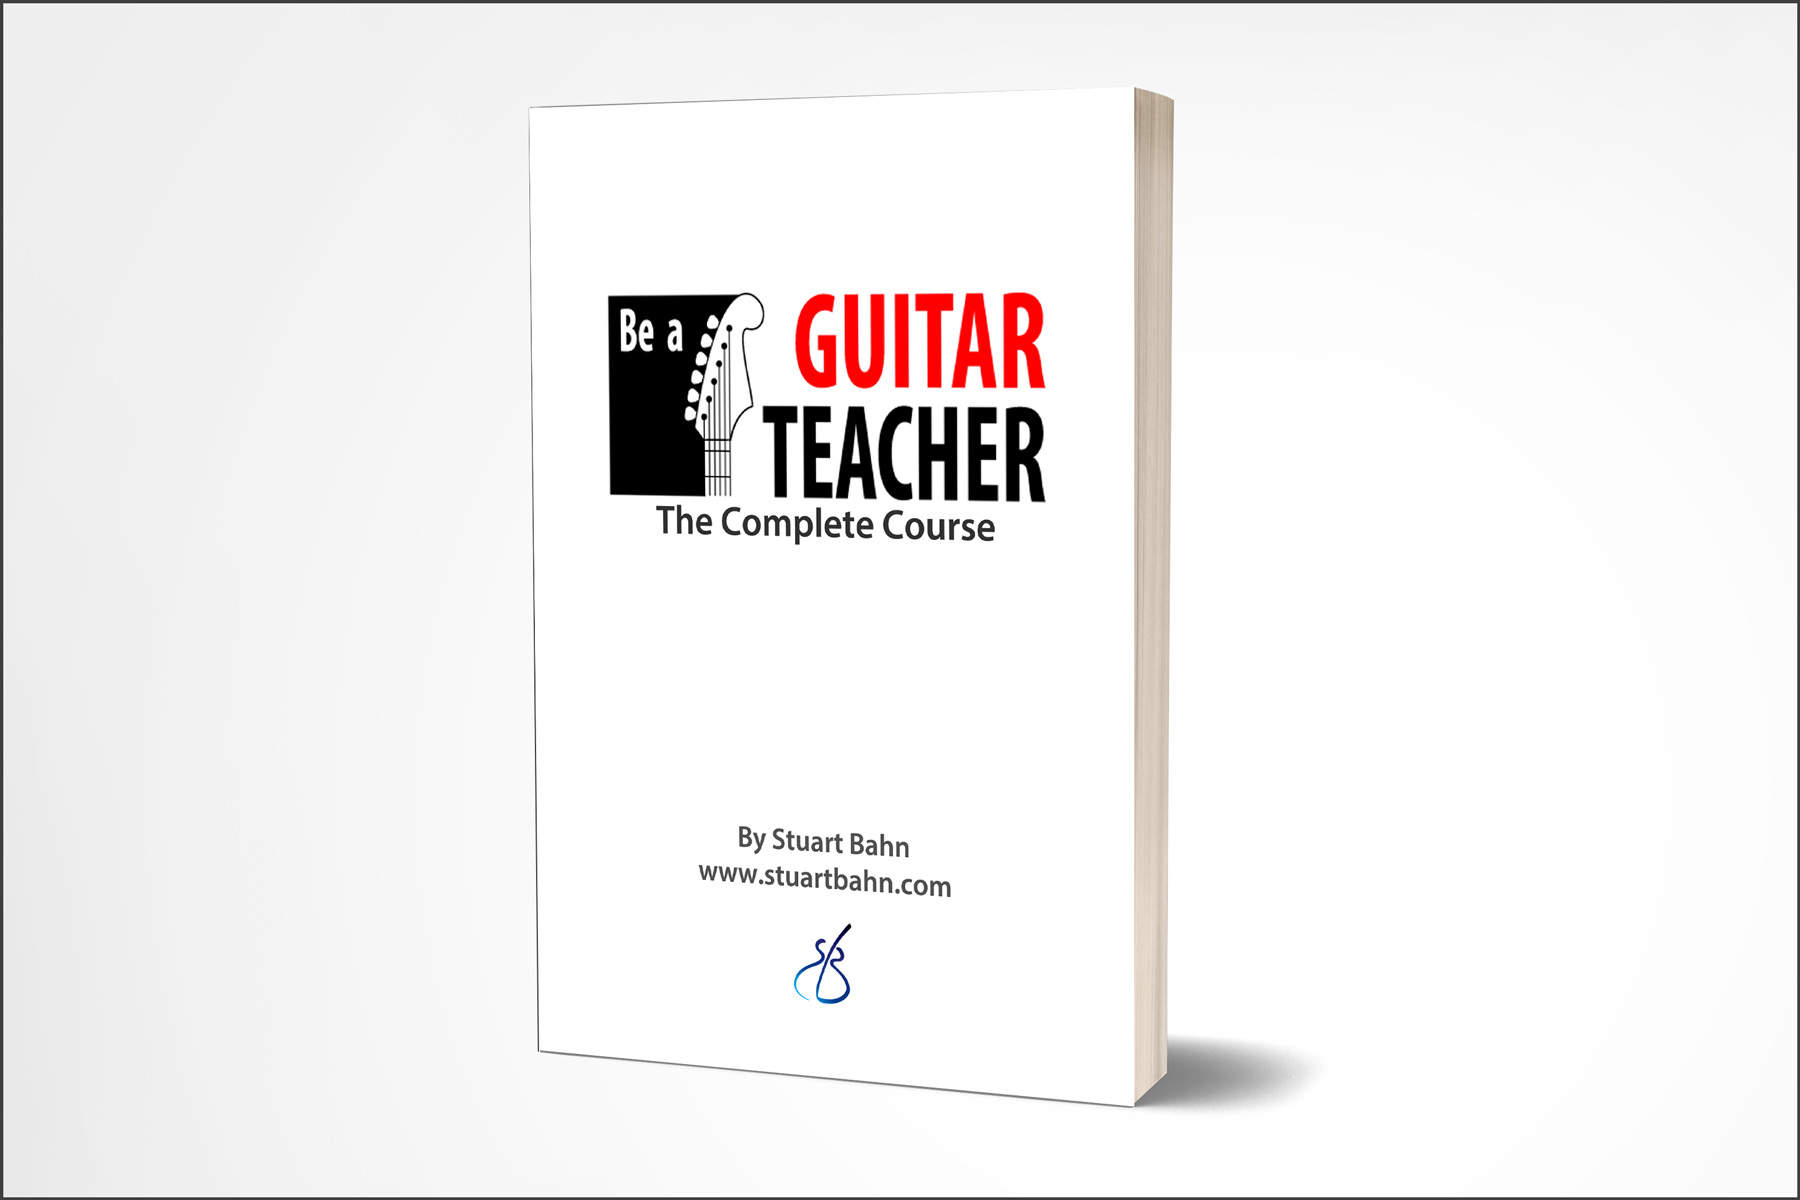 Be a guitar teacher course